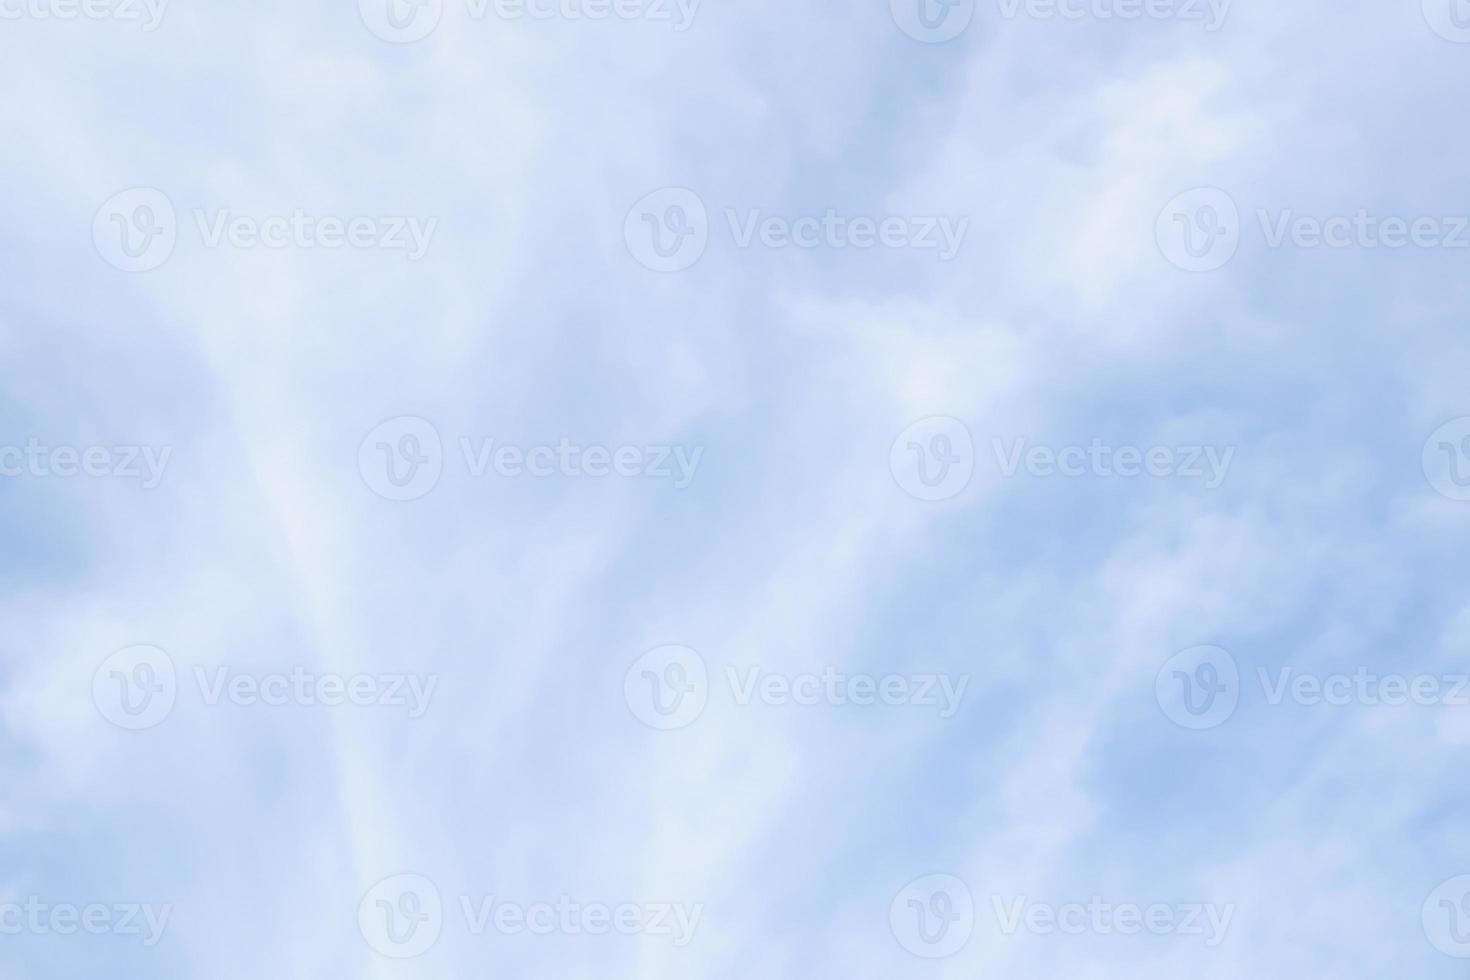 beautiful cloud on blue sky as a background photo